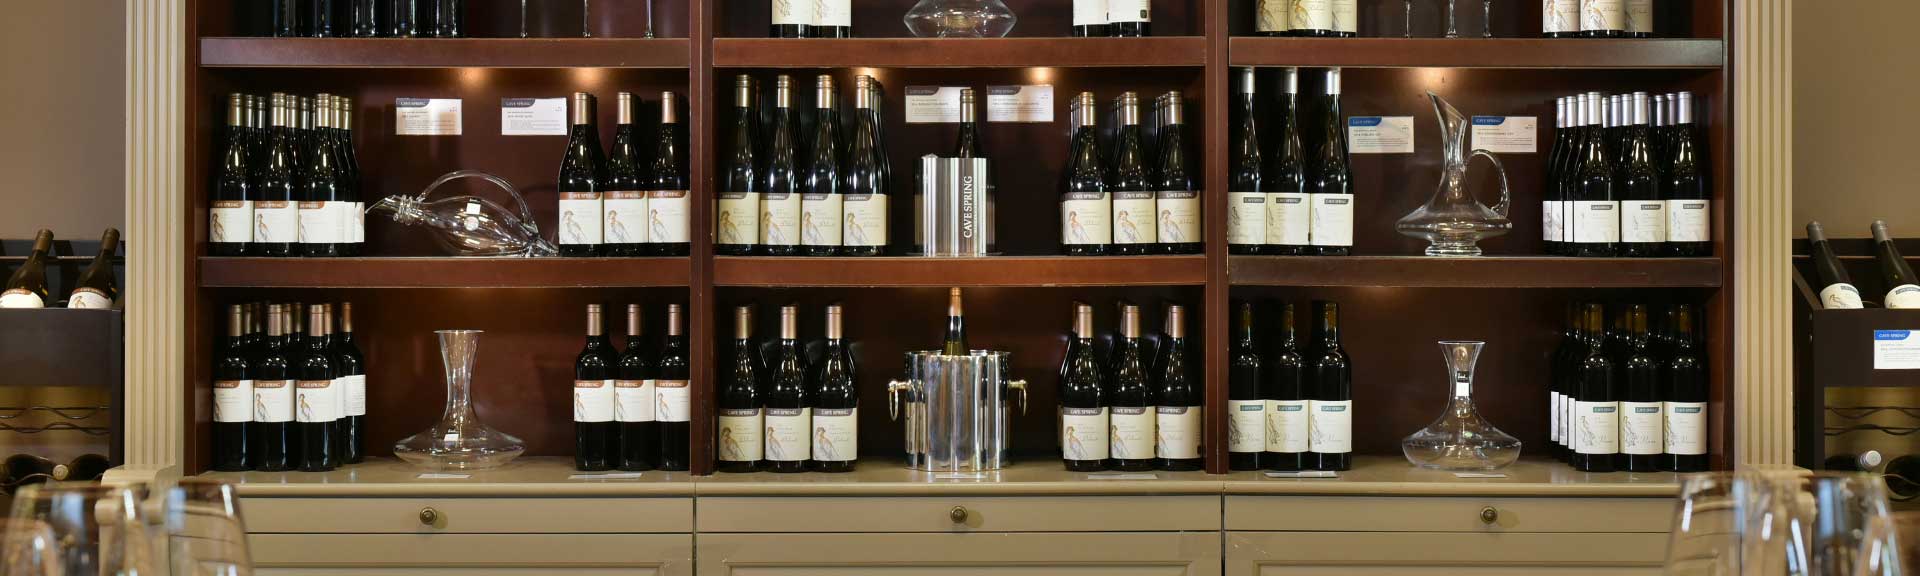 Cave Spring Wine Shop Shelf